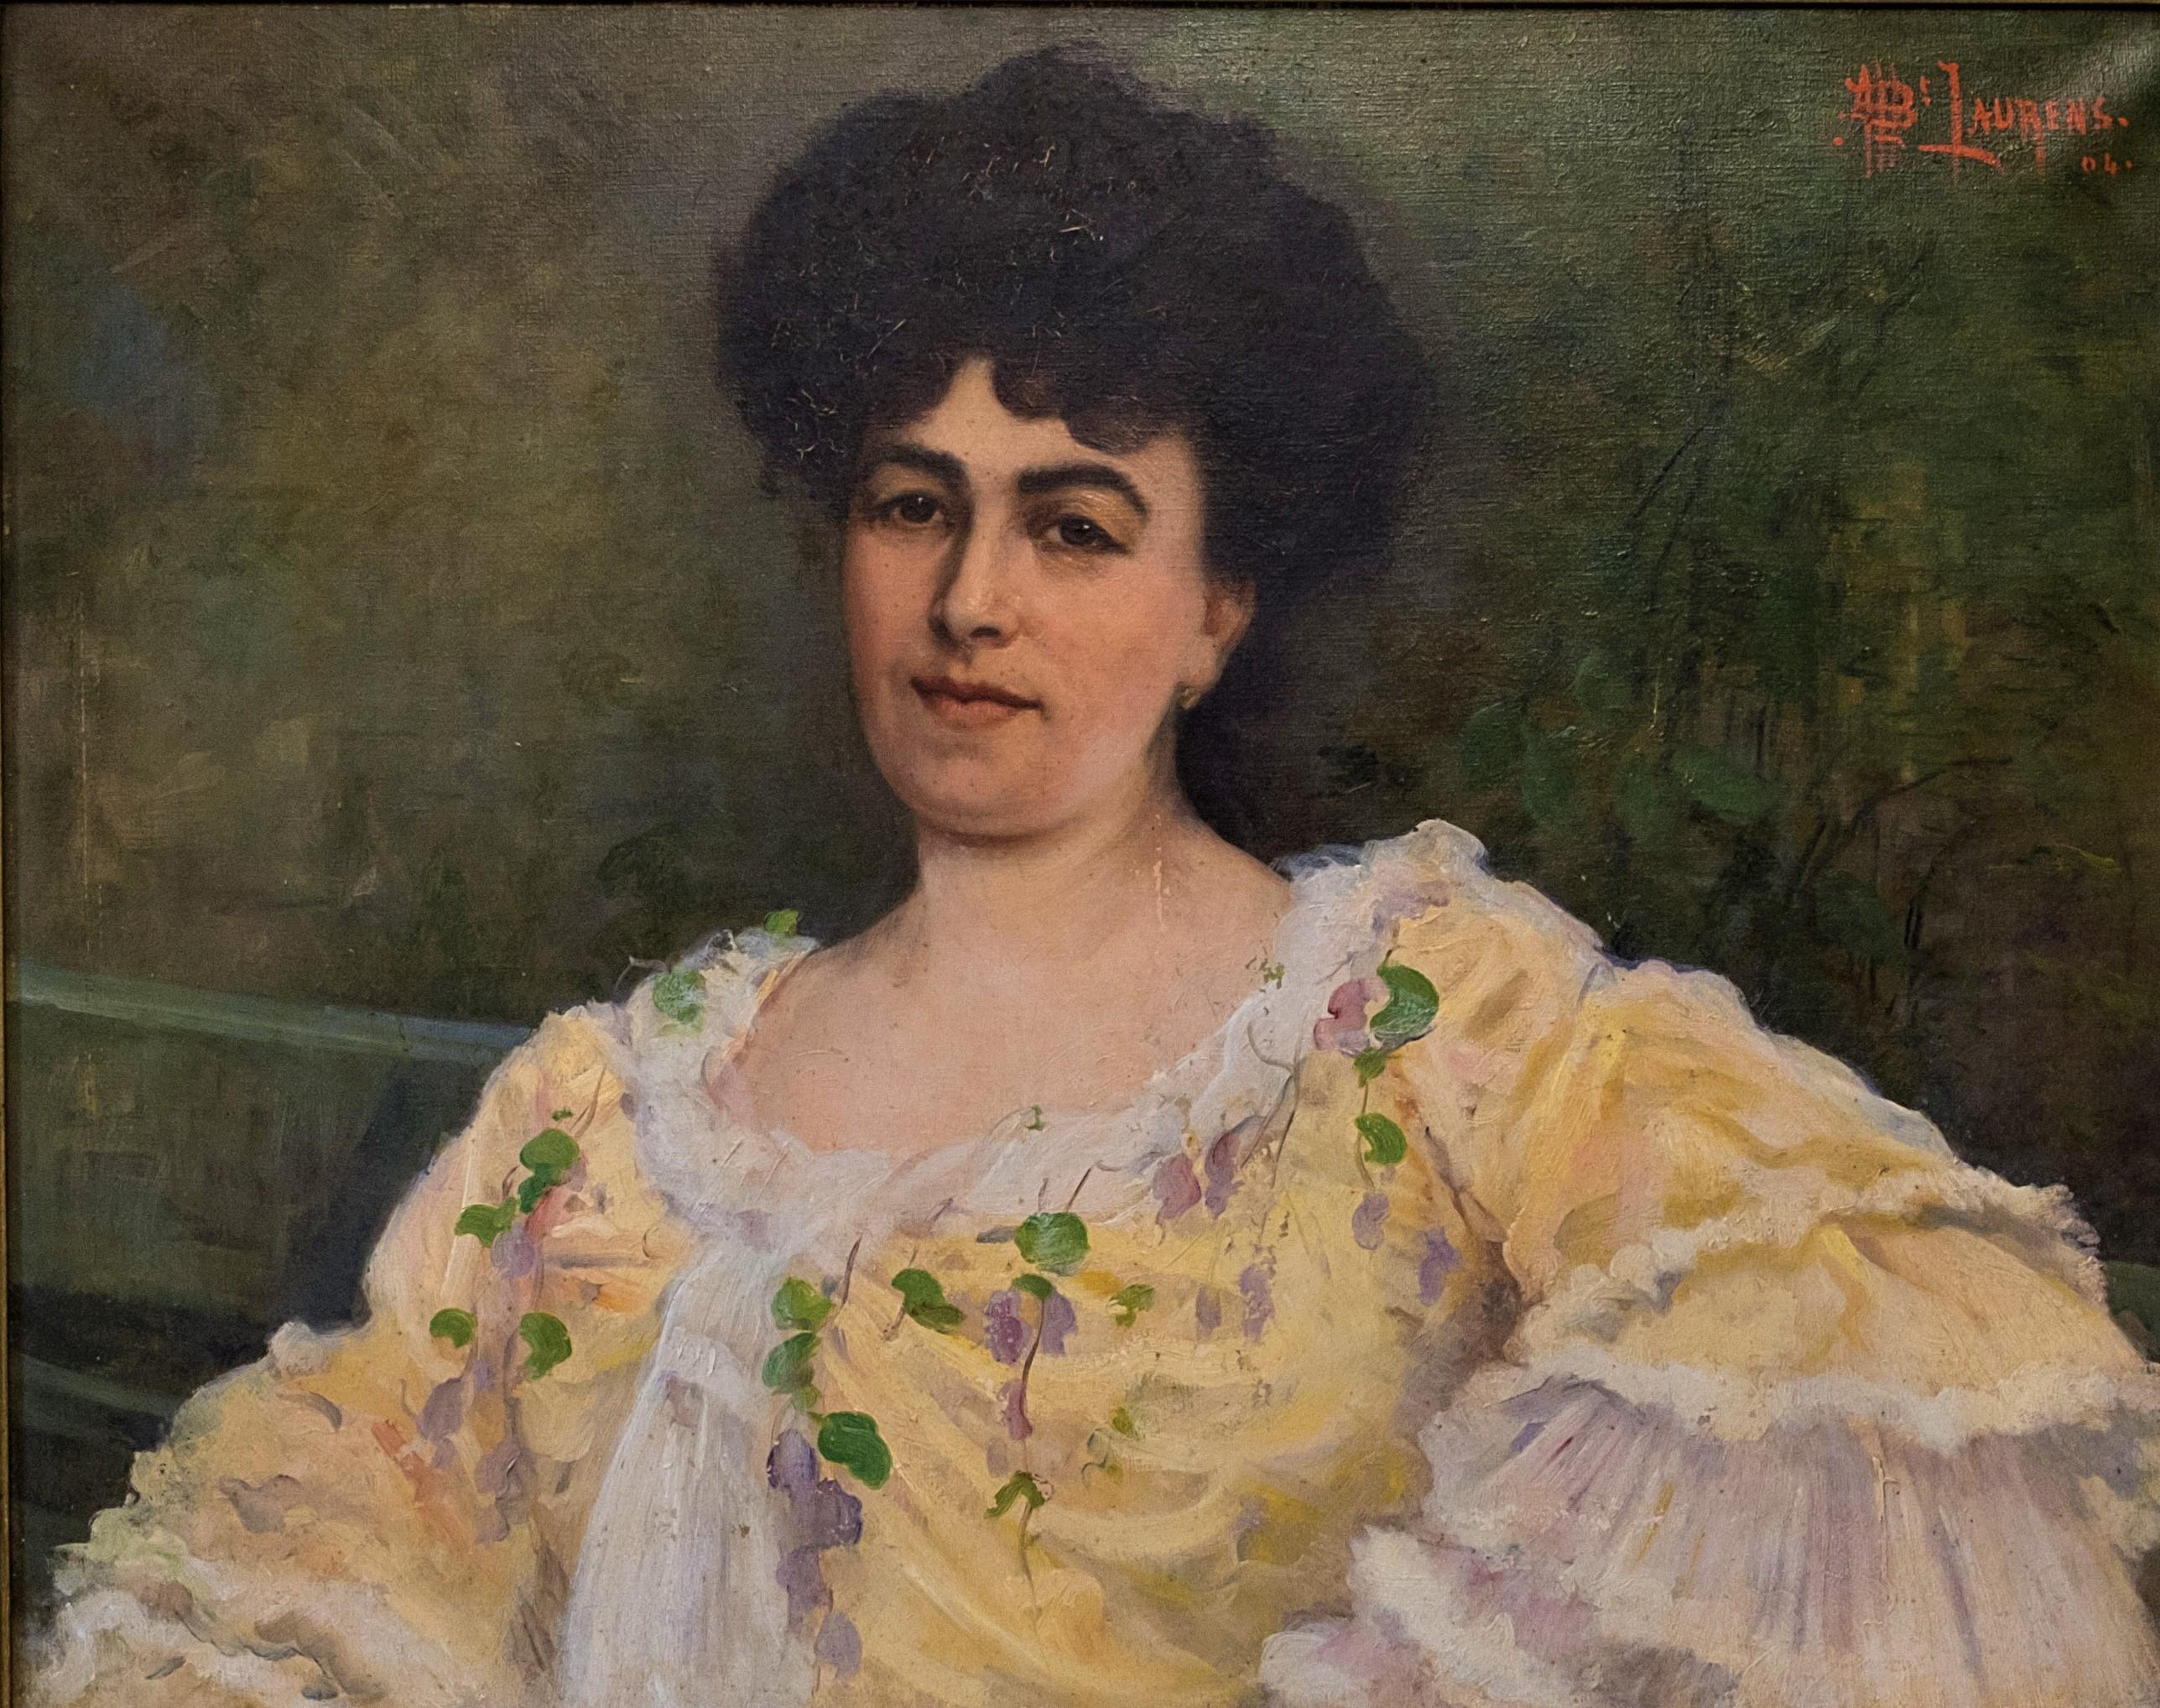 Paul Albert Laurens Portrait Painting - 20th Century Impressionism Albert Laurens Female Portrait Oil on Canvas Yellow